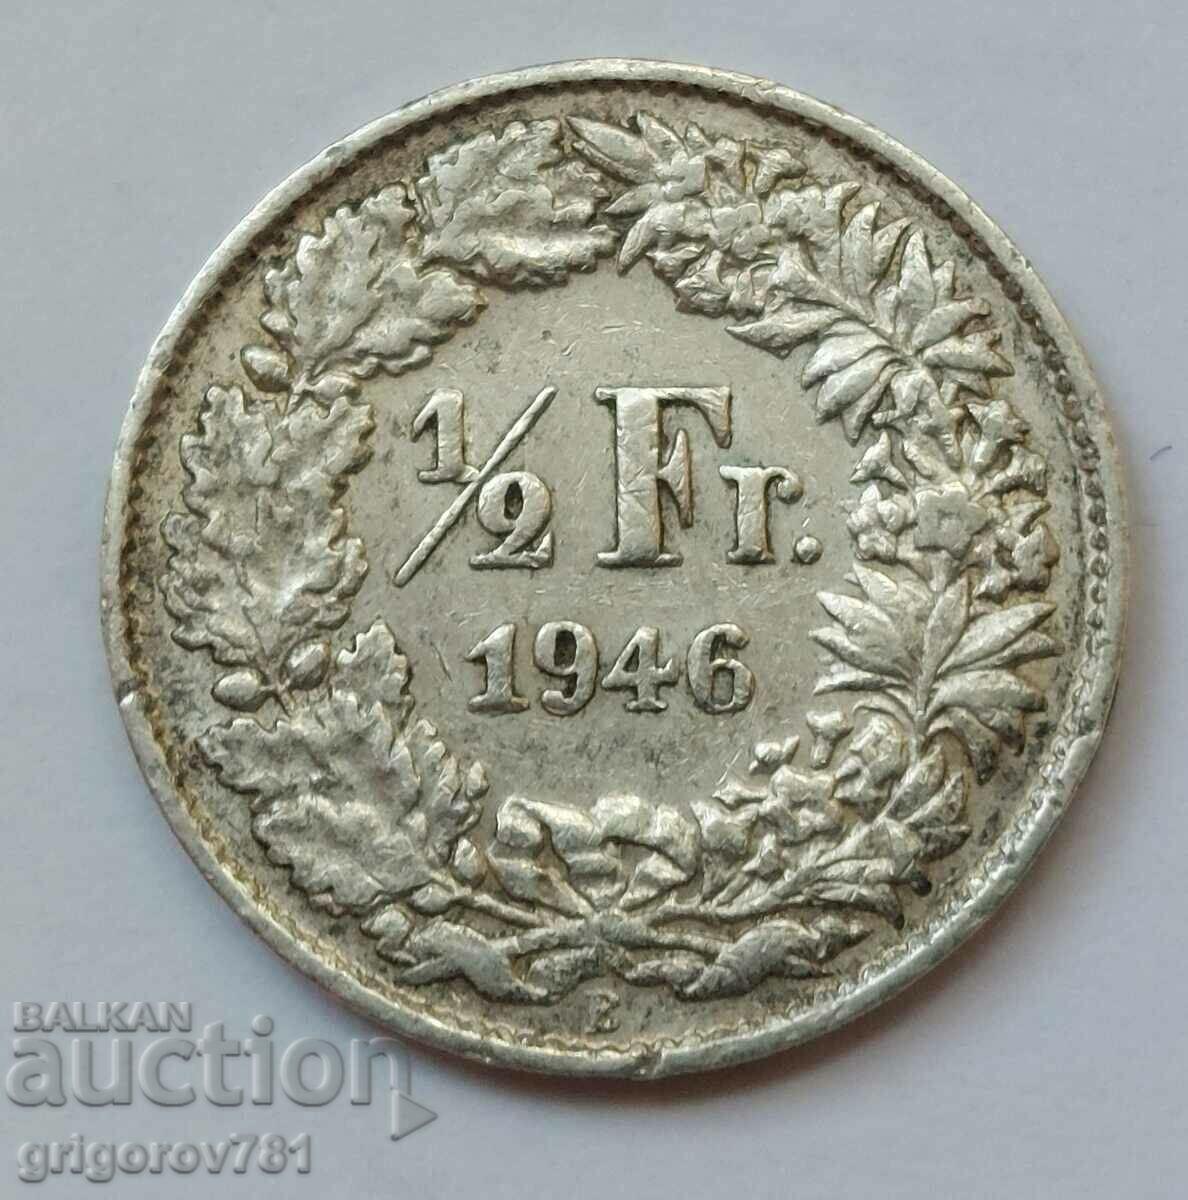 1/2 franc silver Switzerland 1946 B - silver coin